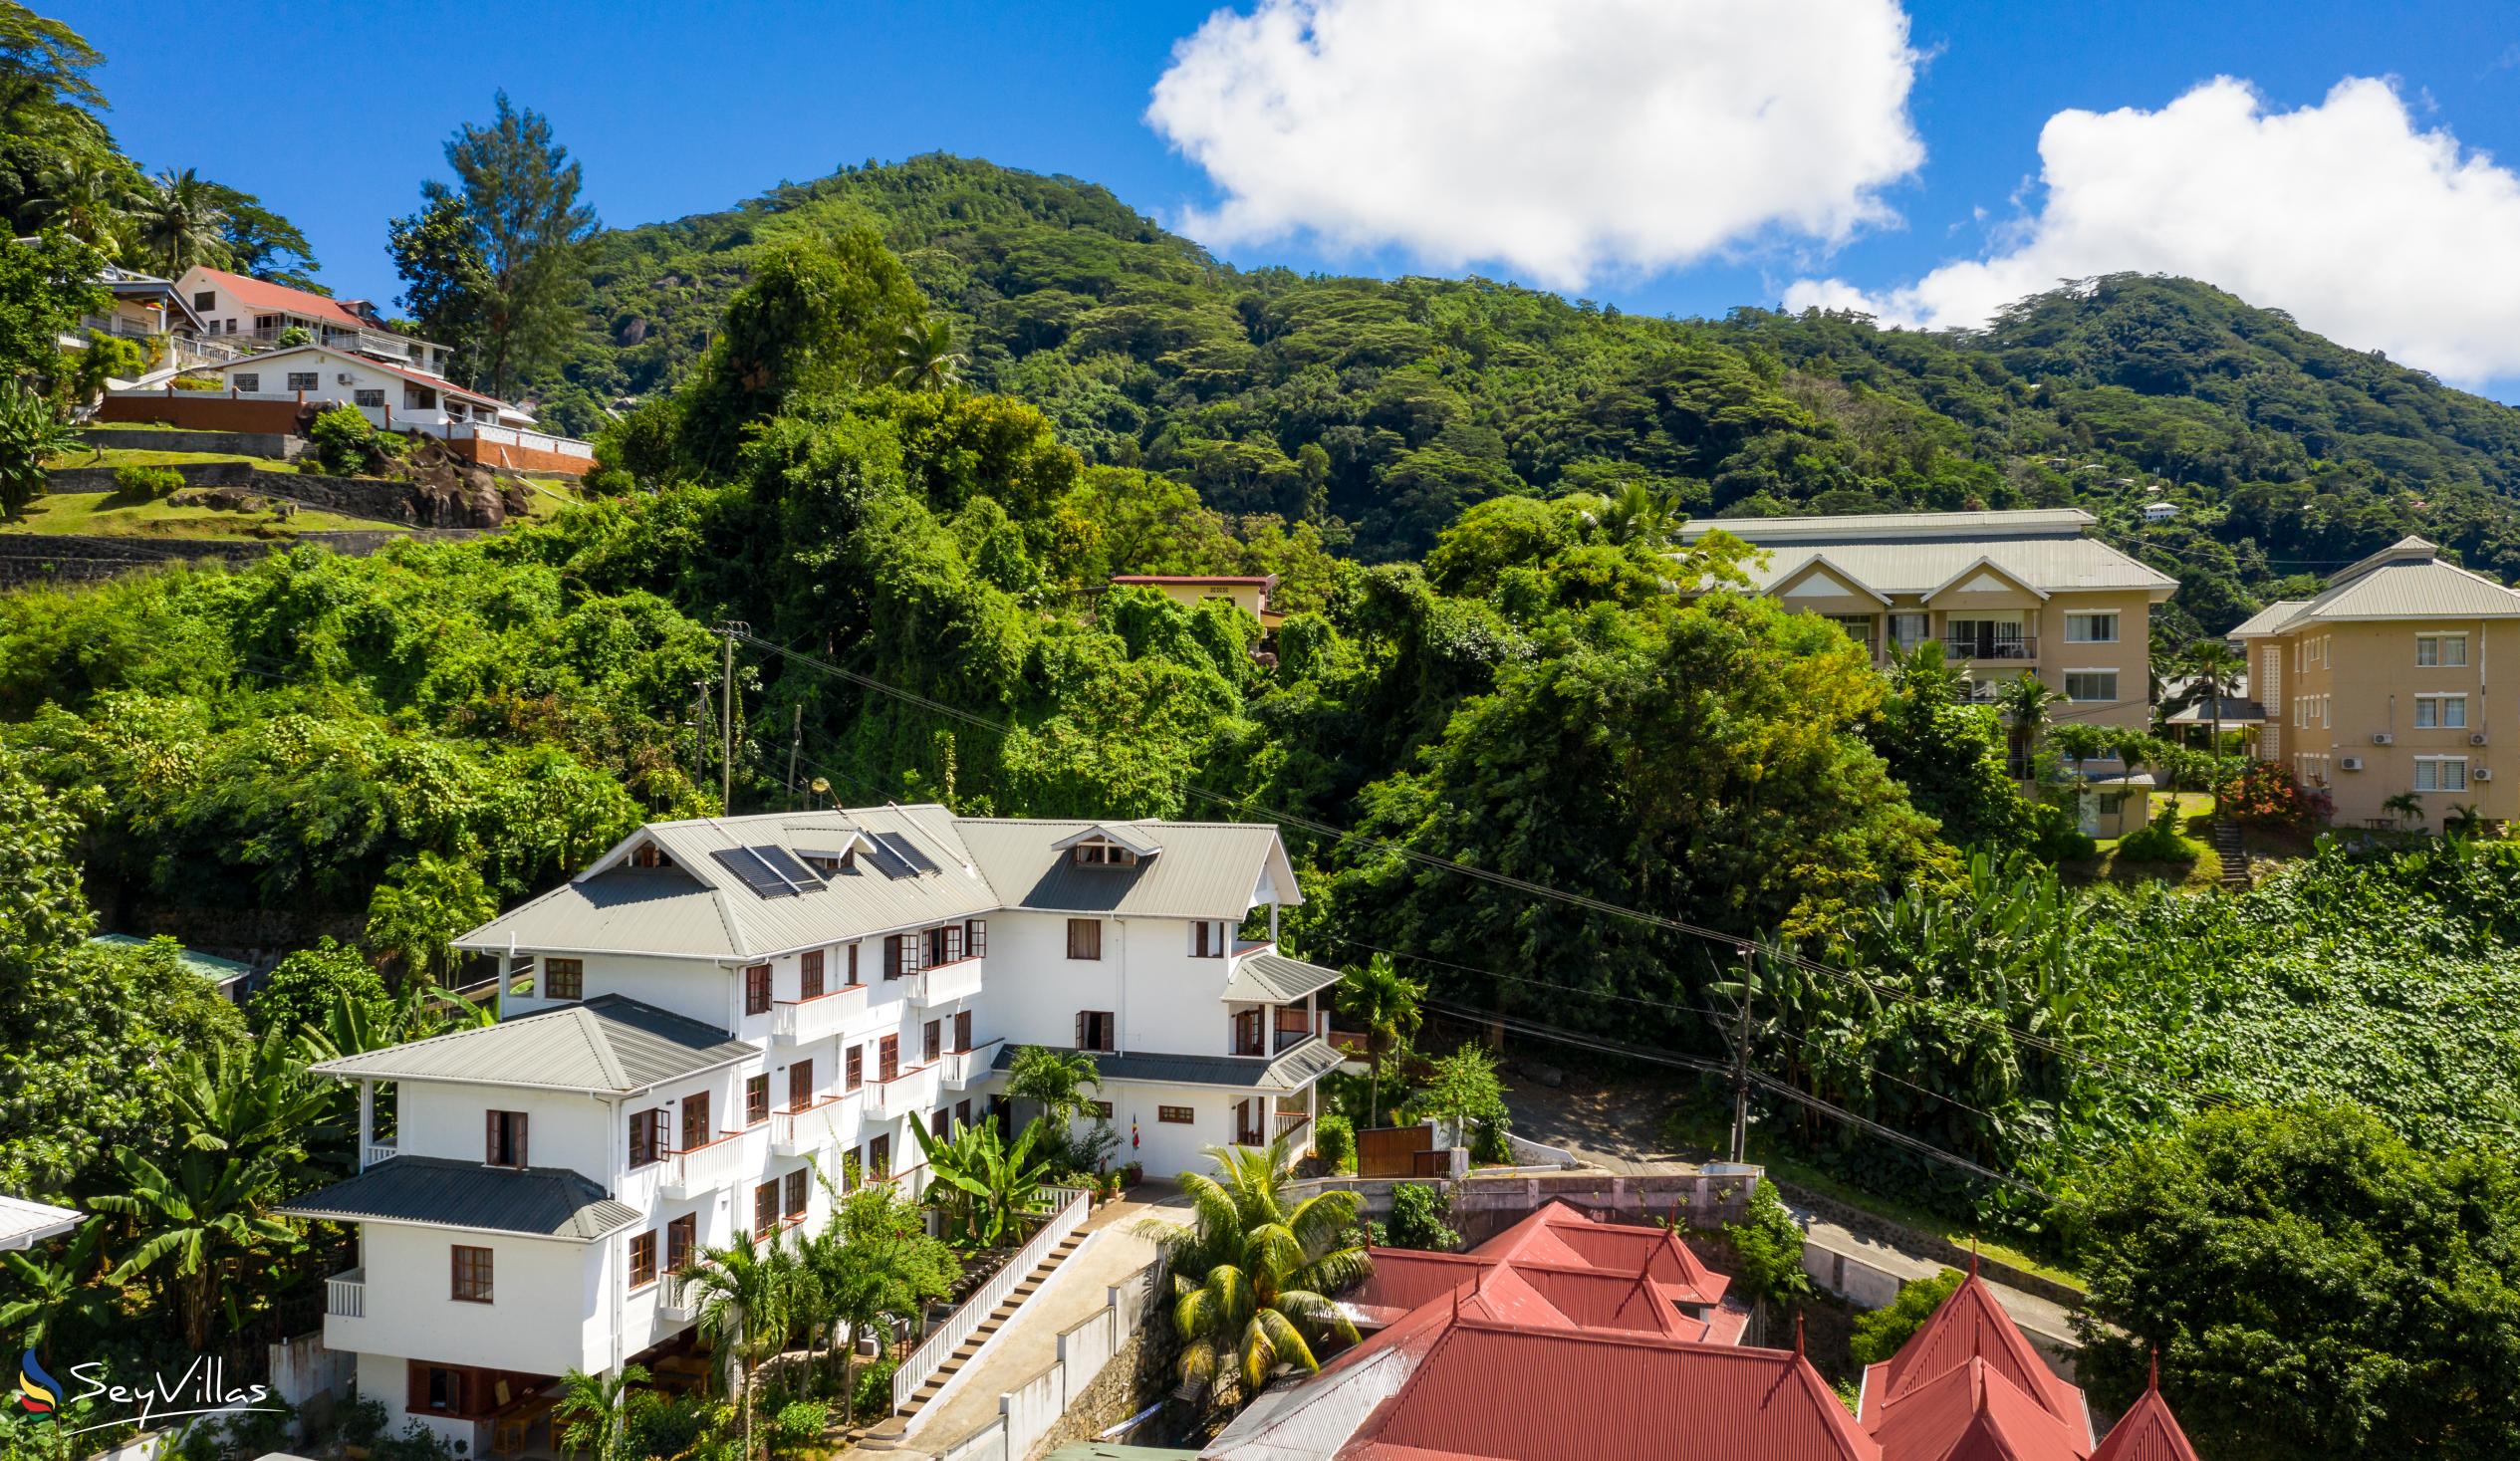 Photo 3: Hilltop Boutique Hotel - Outdoor area - Mahé (Seychelles)